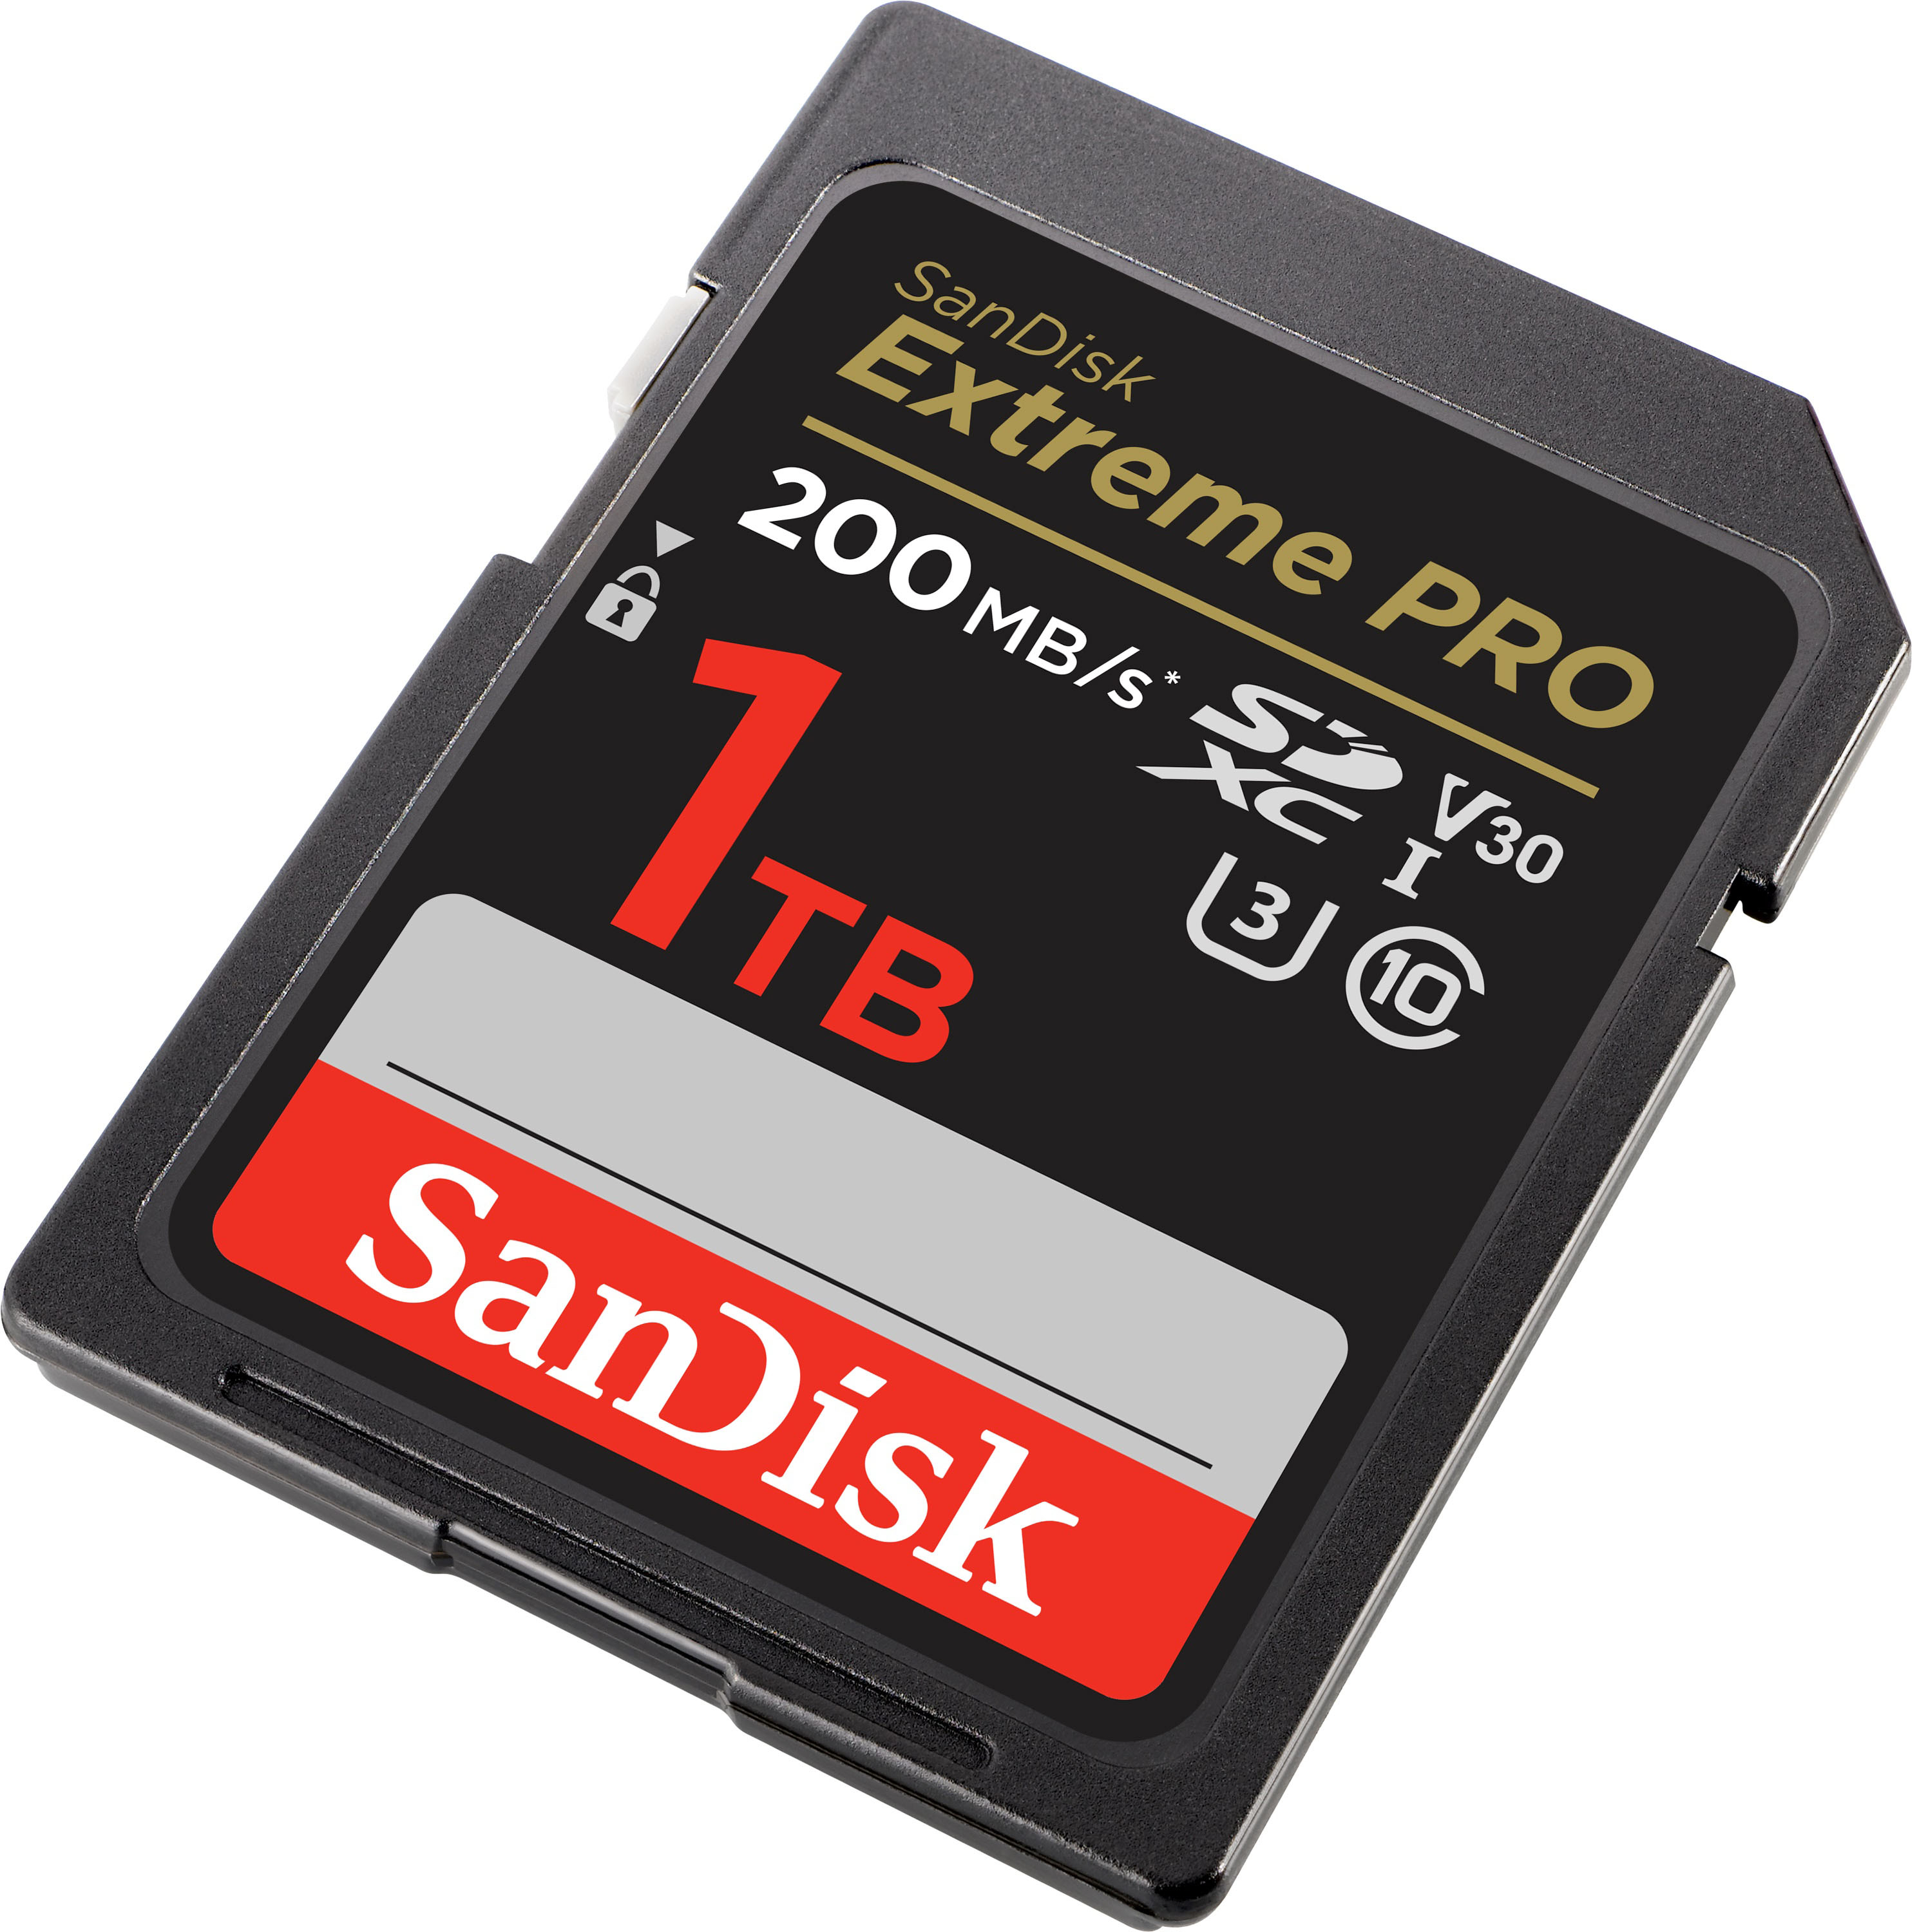 SanDisk Extreme PRO 1TB SDXC UHS-I Memory Card SDSDXXD-1T00-ANCIN - Best Buy